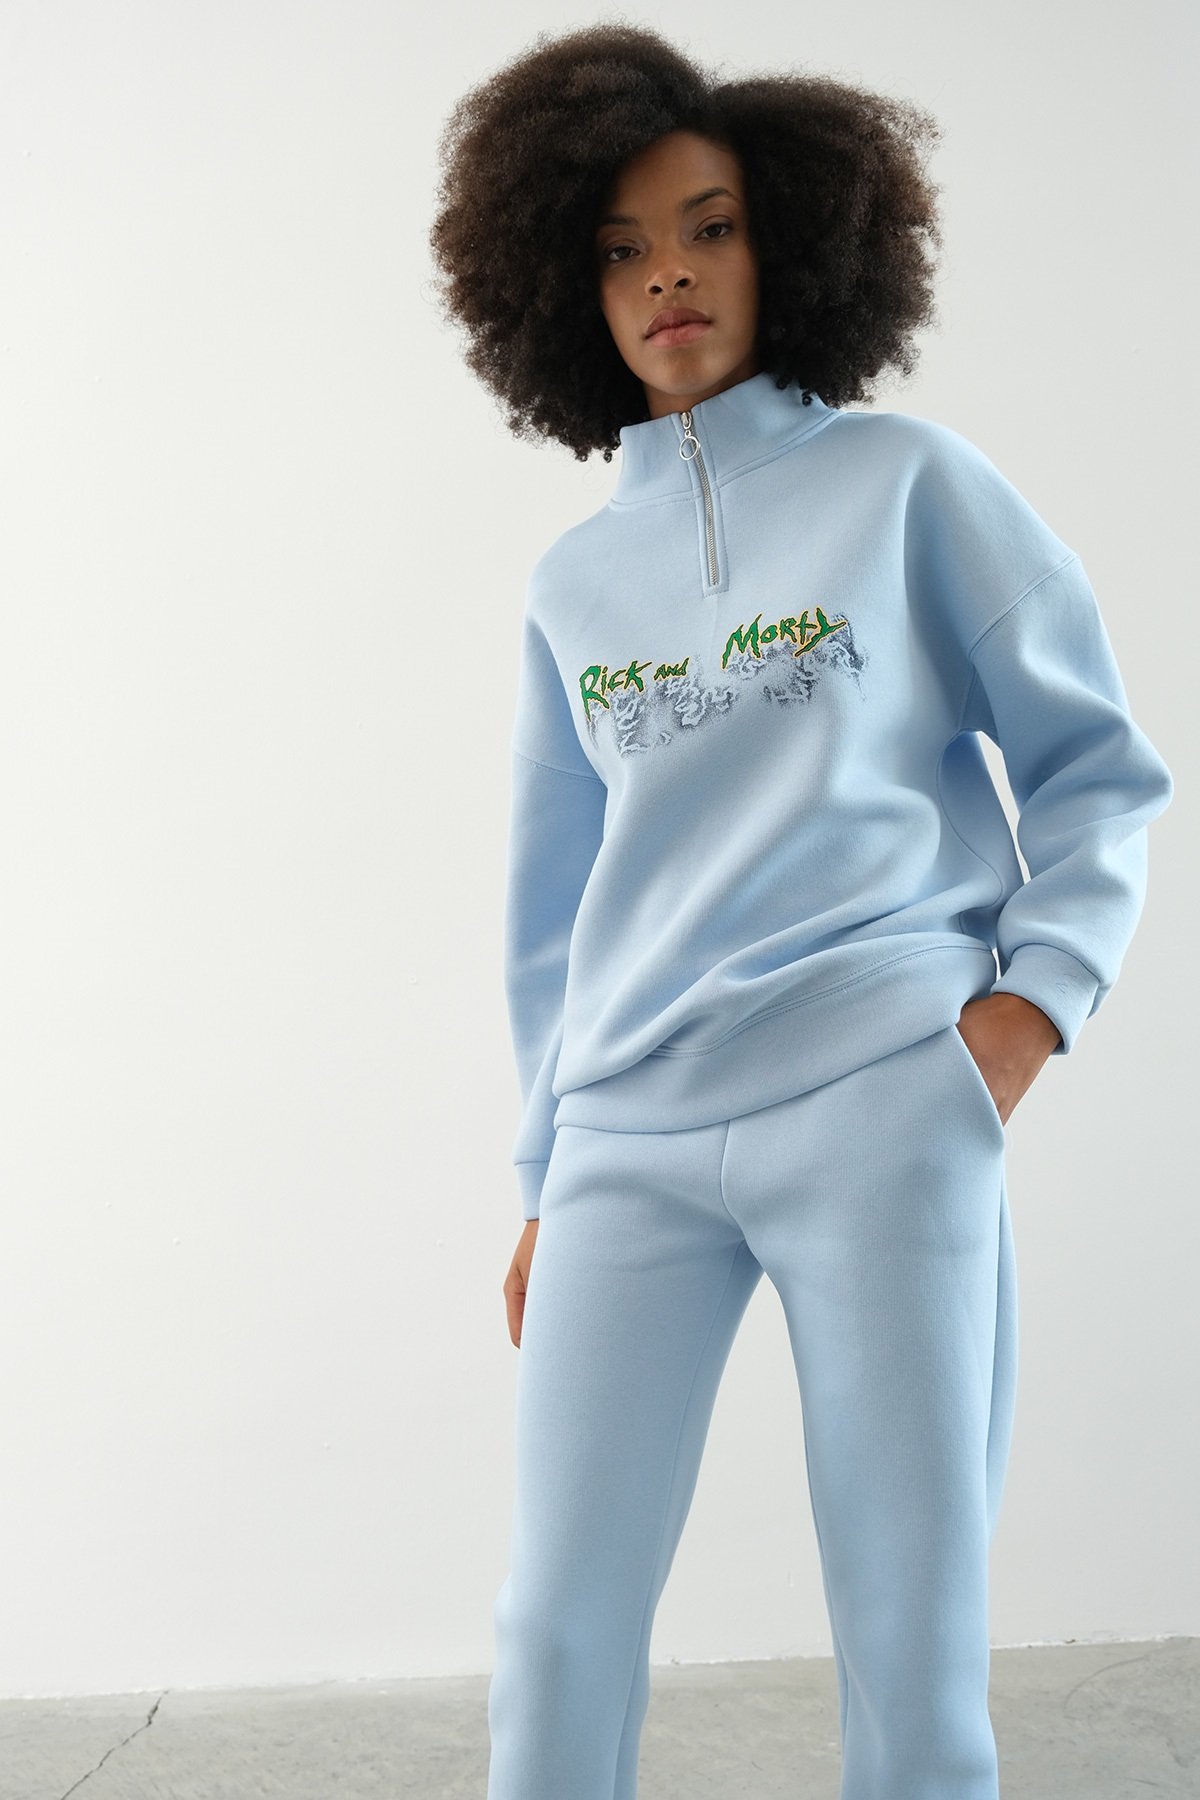 Rick and Morty Baskılı Sweatshirt Takımı - Mavi - 6003 - 2 Lİ TAKIM -  ParkHande